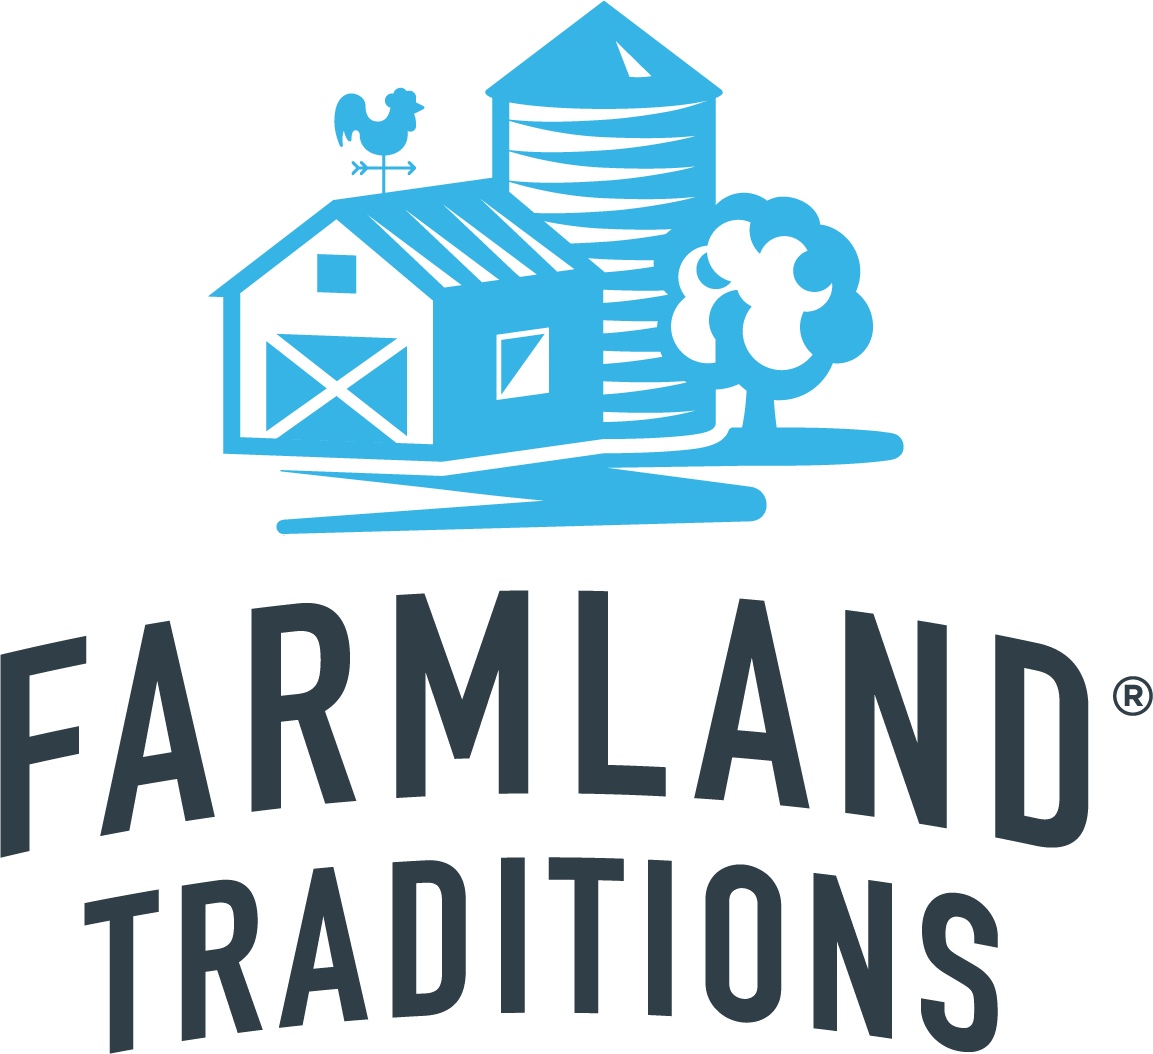 Farmland Traditions Logo Image